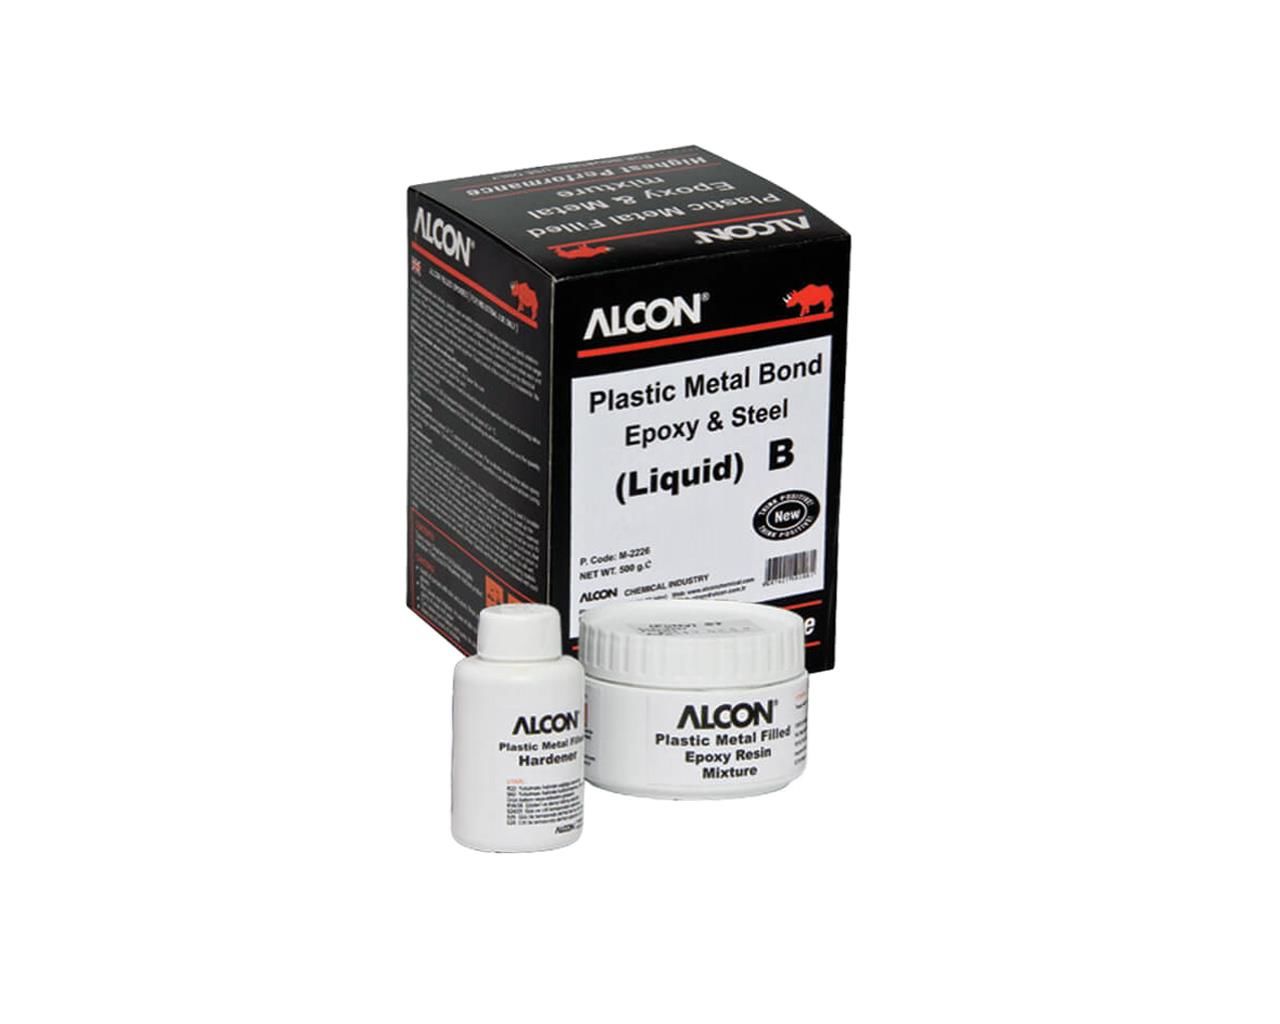 Alcon (B) Liquid Metal Bond M-2226 500gr